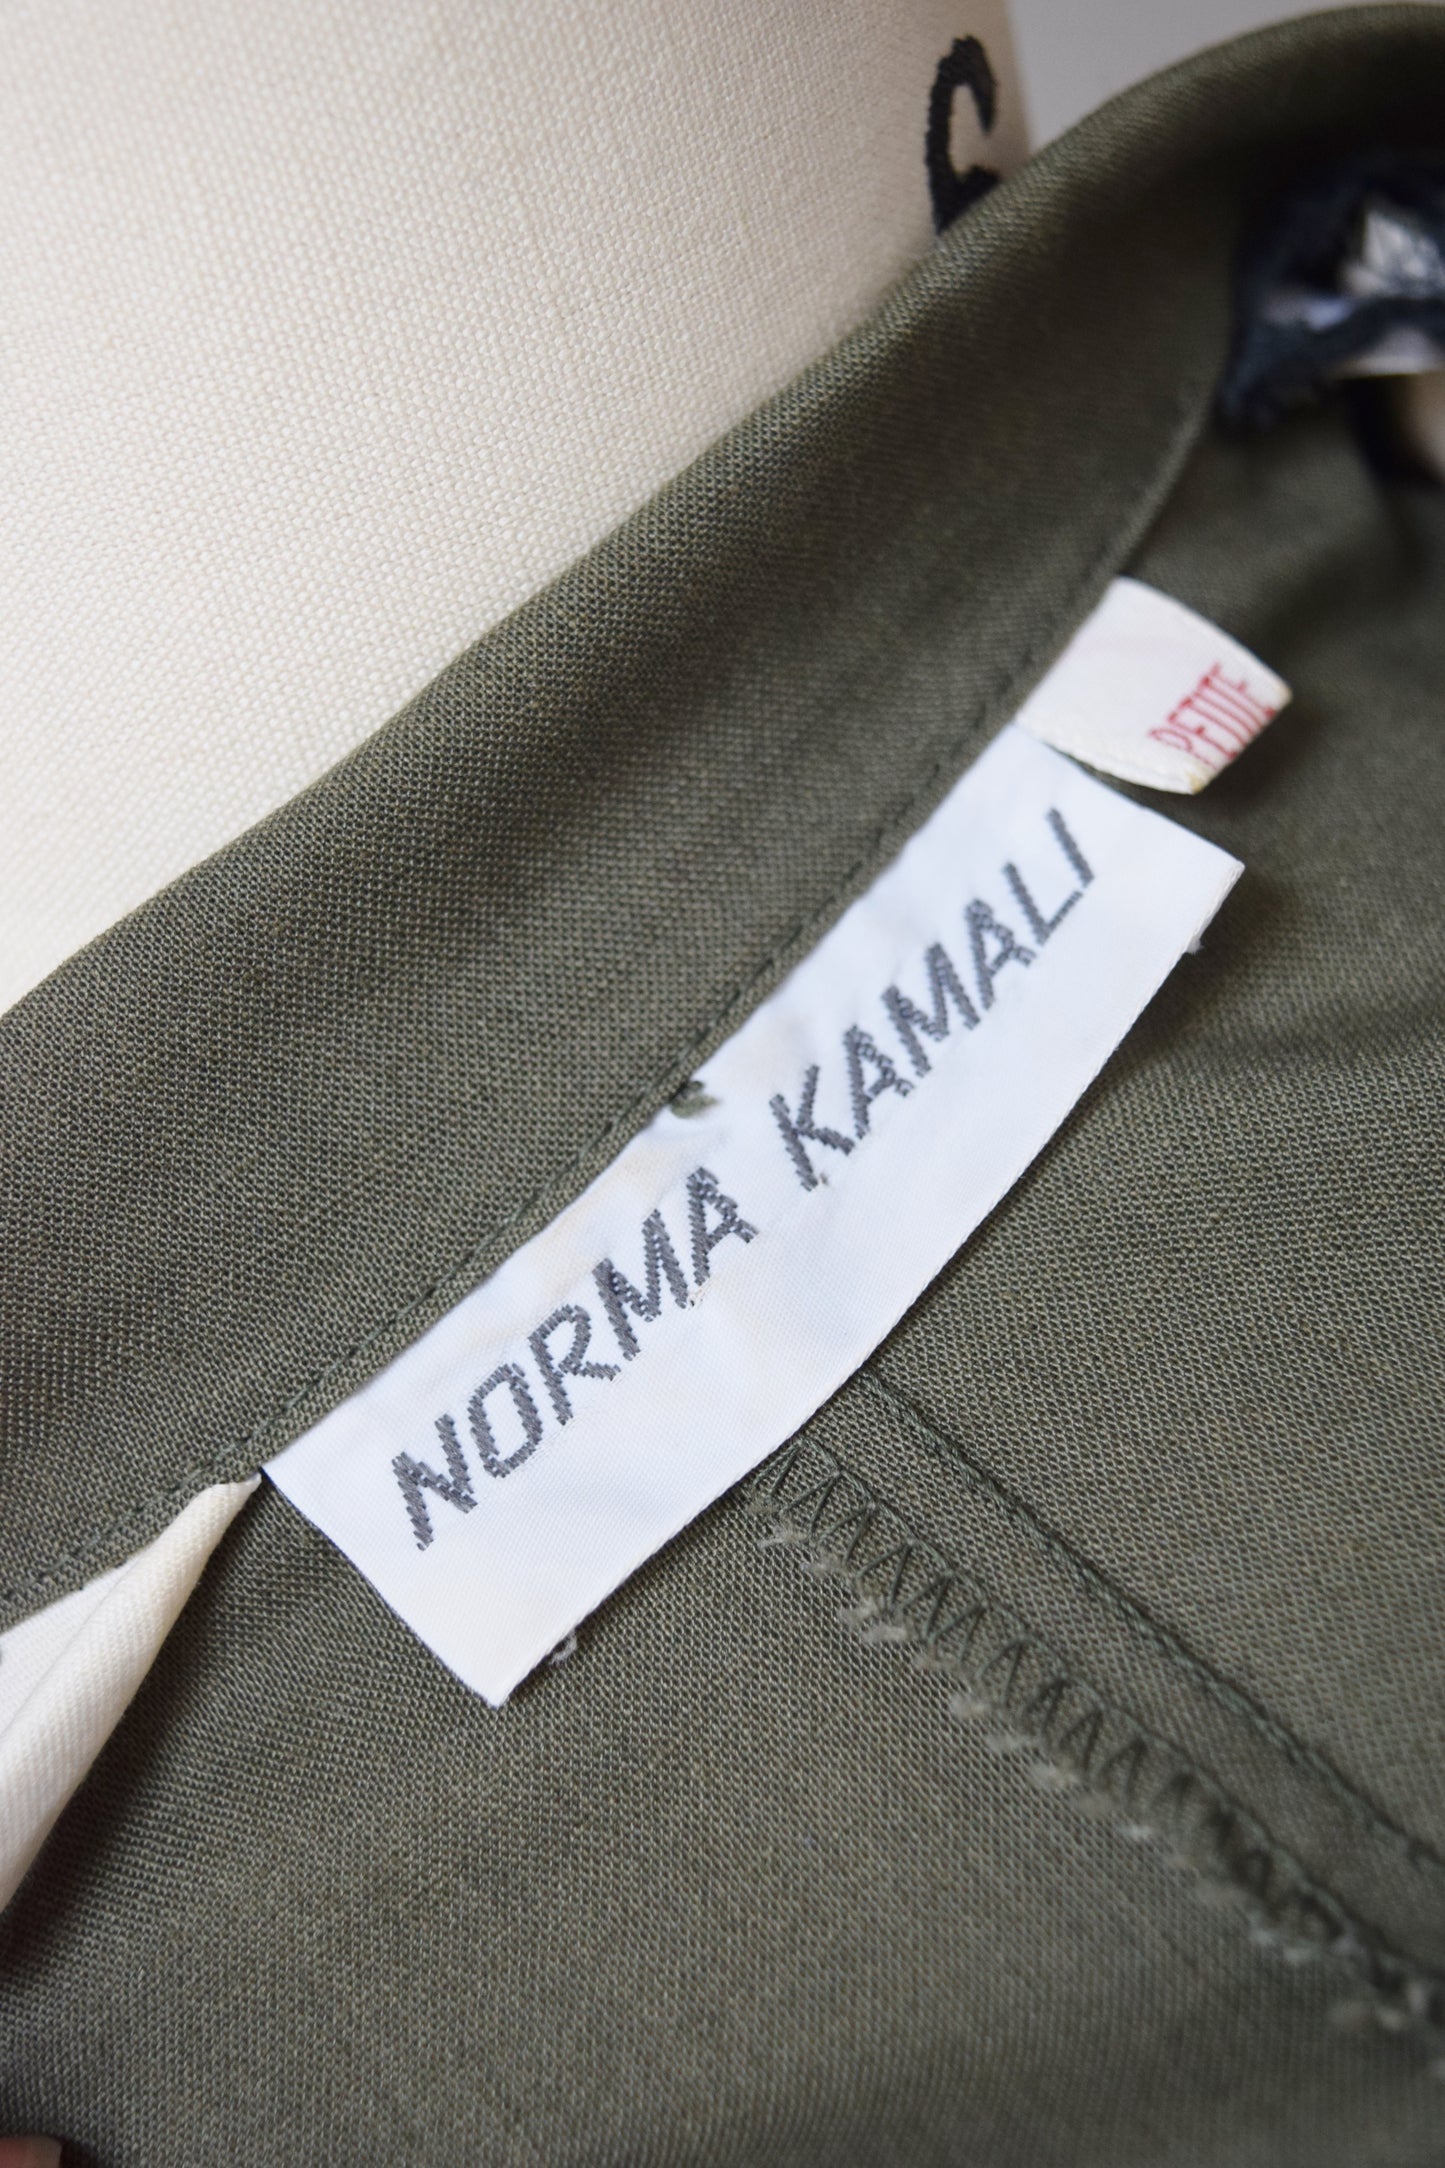 Norma Kamali Olive Green Wrap Dress | SP